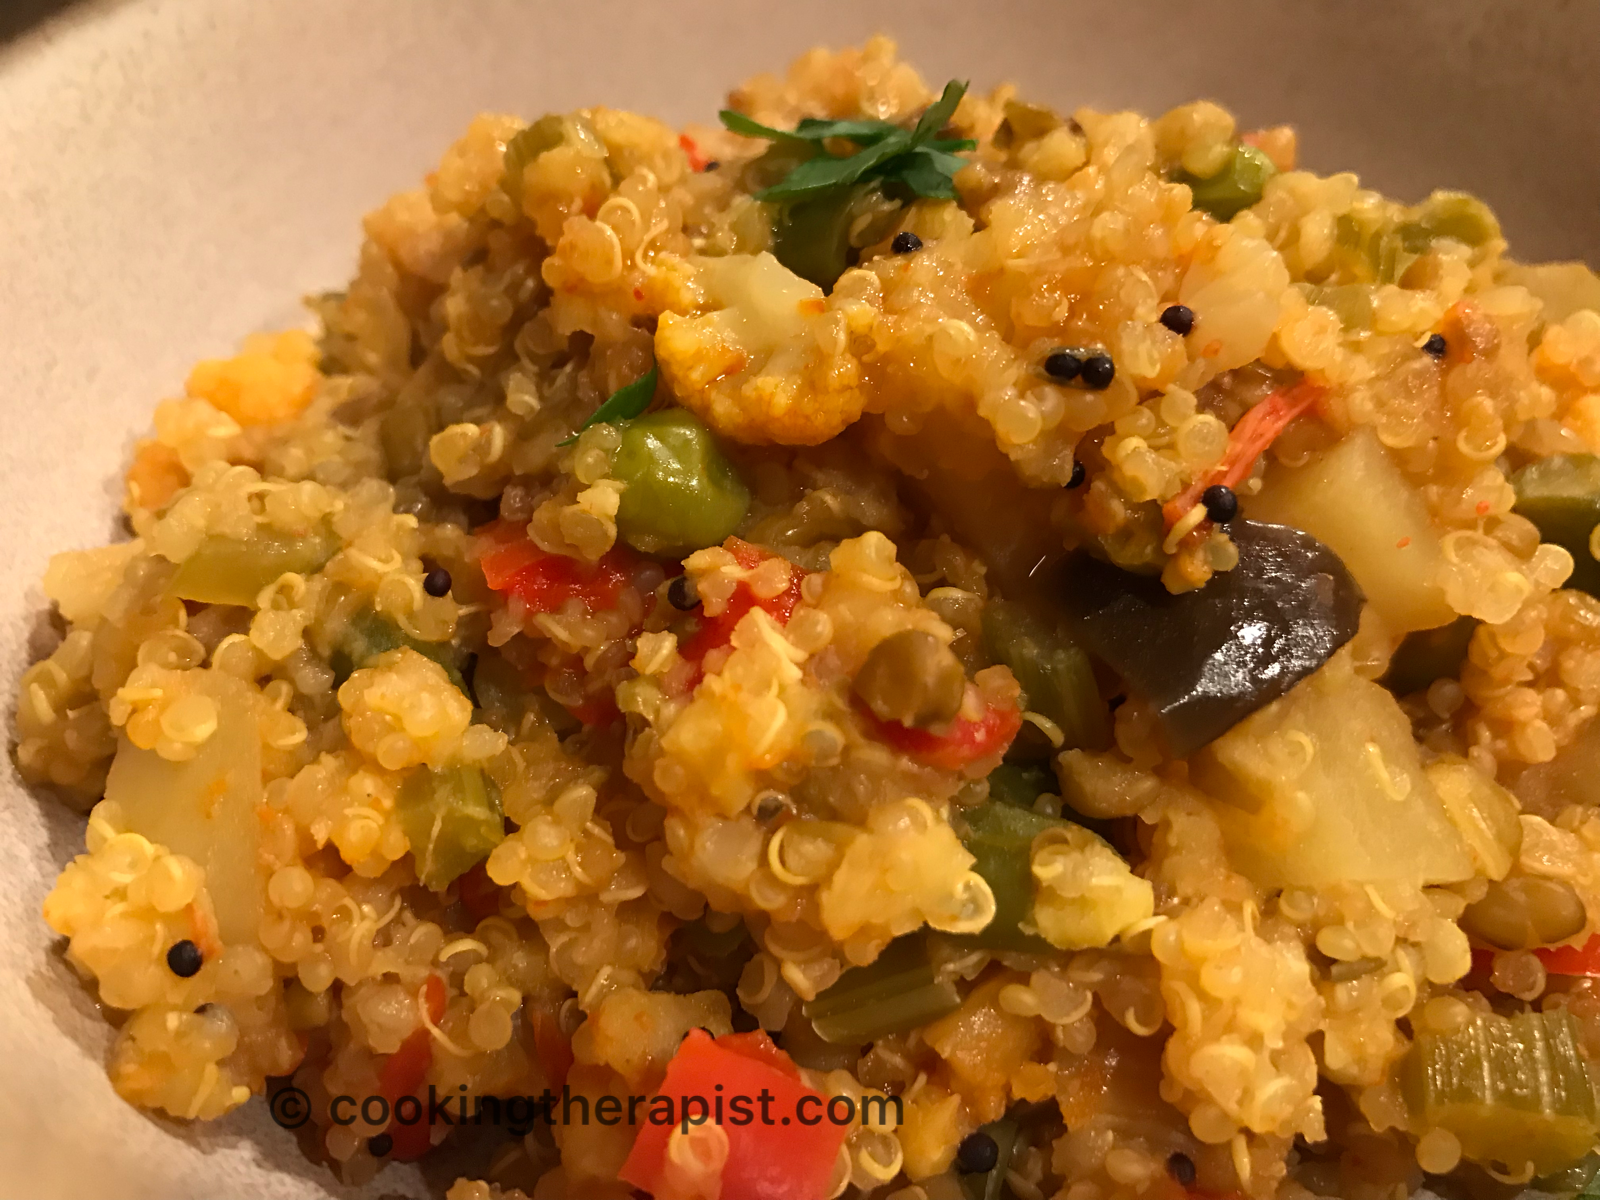 Quinoa khichadi / Quinoa and lentil easy one pot meal / Diabetic friendly bowl ( Vegan + Gluten Free)